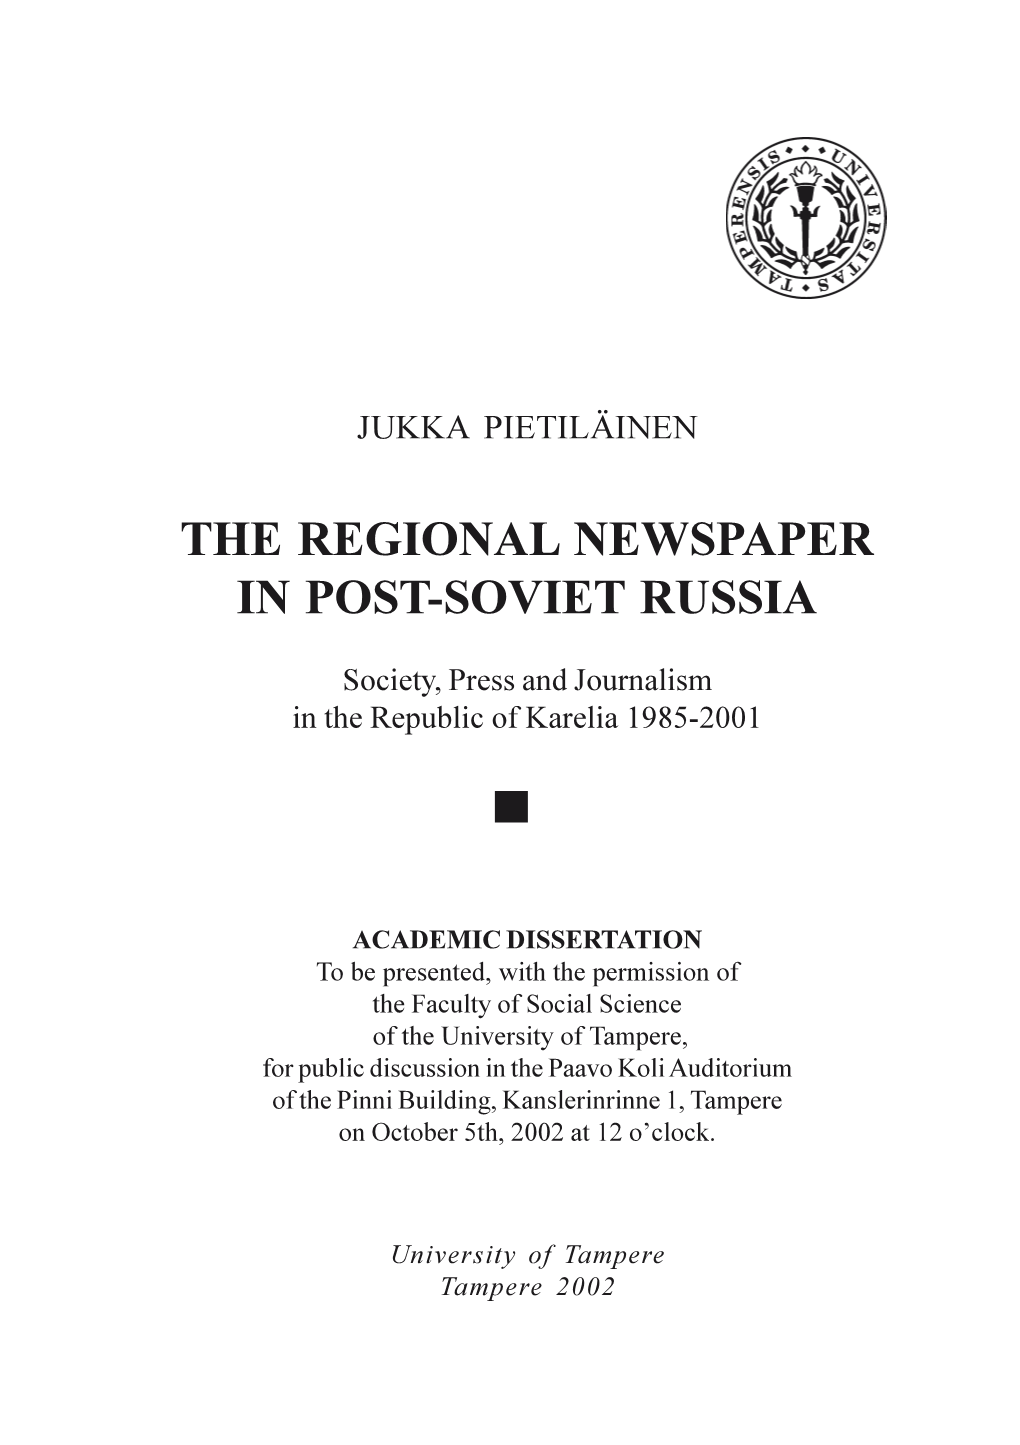 The Regional Newspaper in Post-Soviet Russia